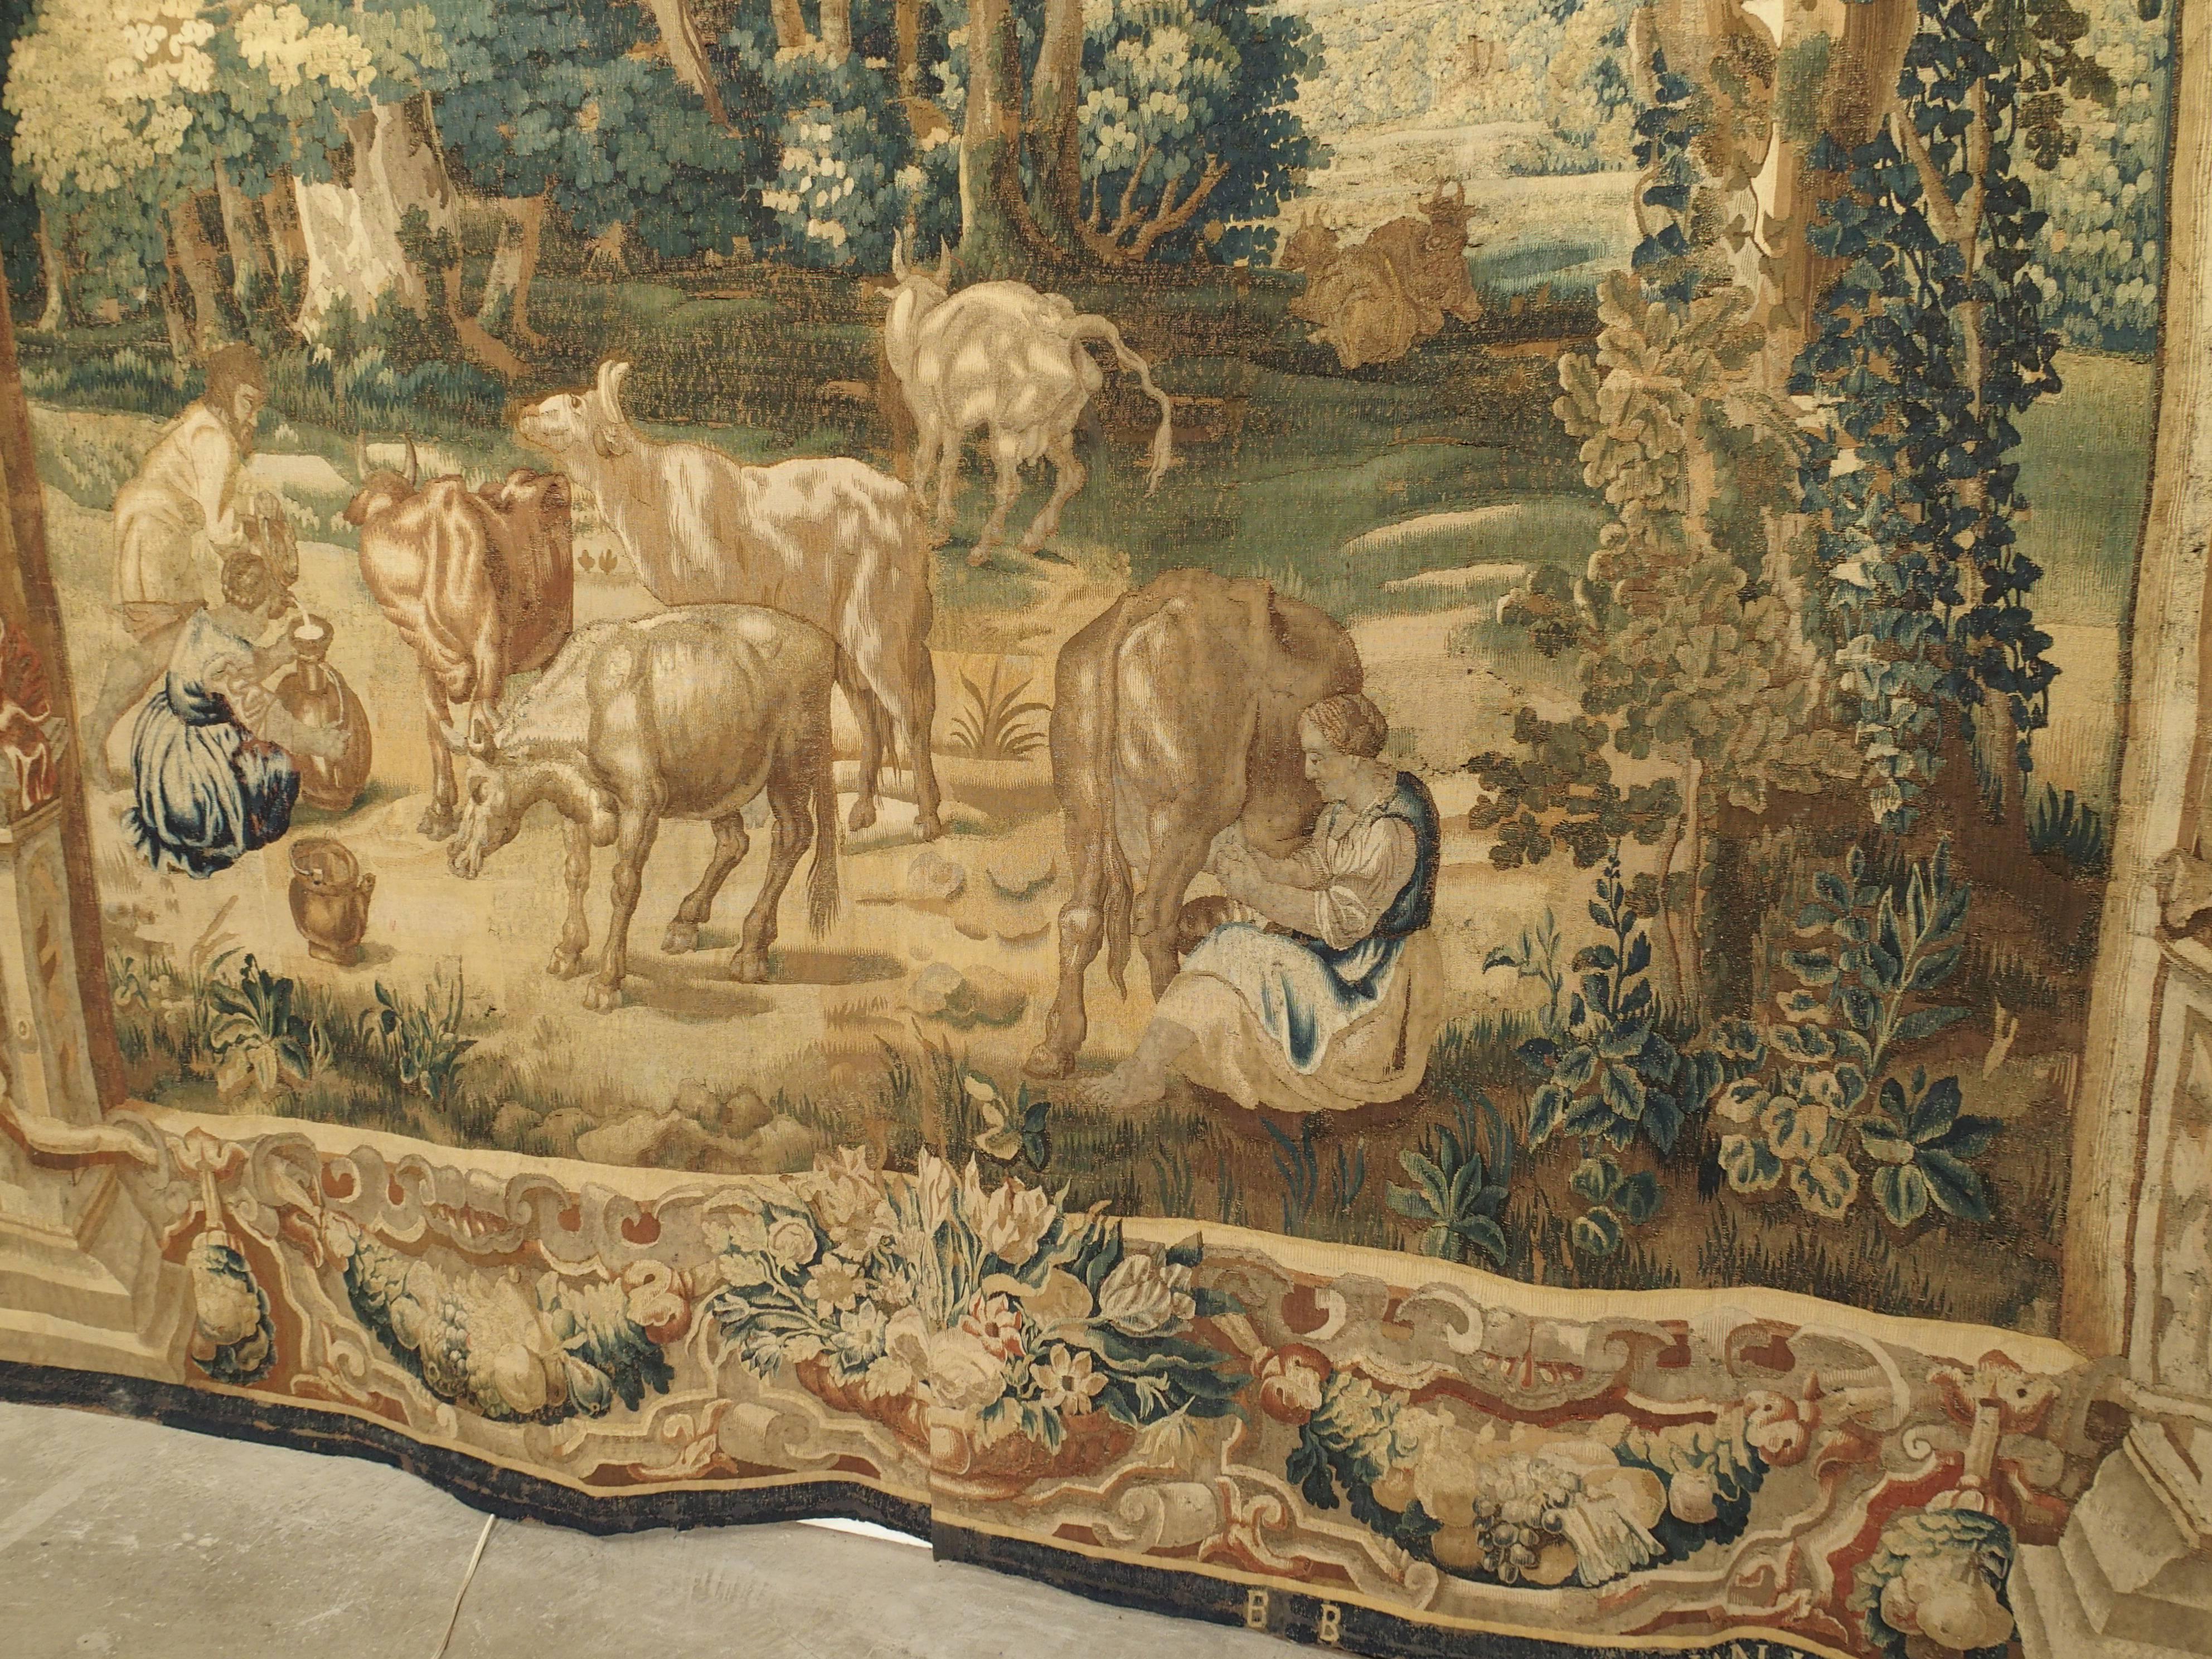 Hand-Woven Rare 17th Century Brussels Tapestry by Ian Van Leefdael